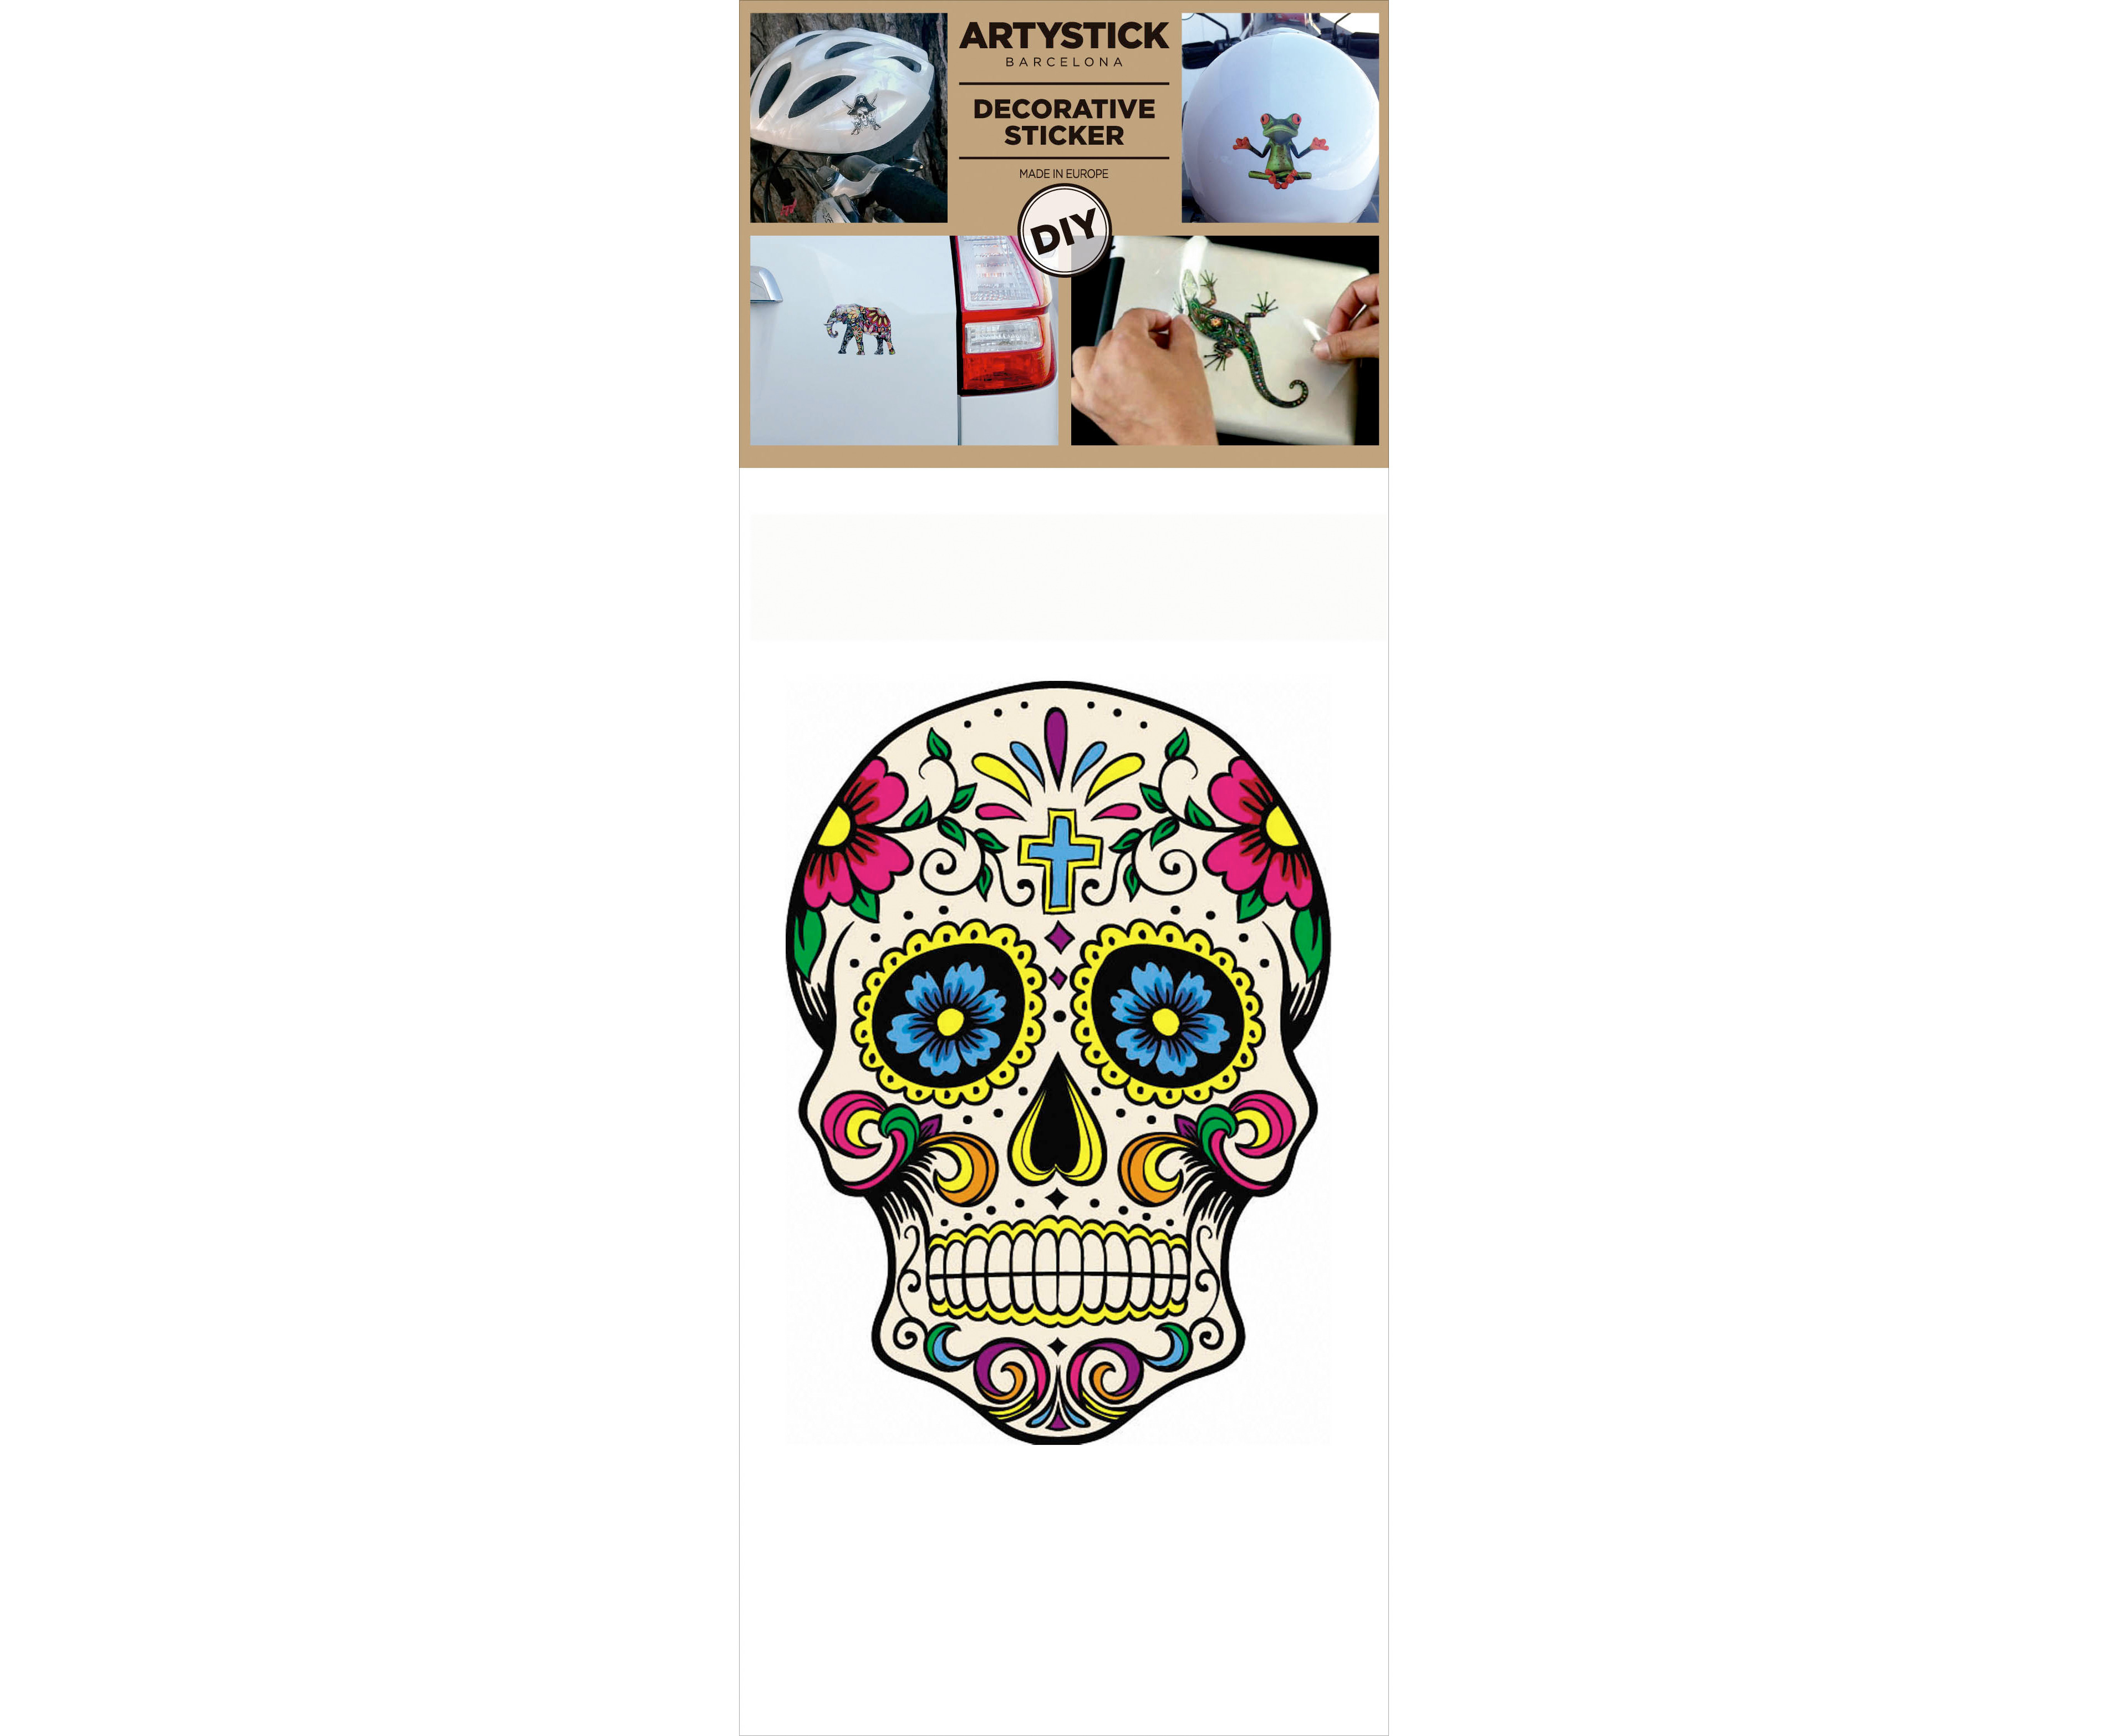 Artystick Decorative Stickers 3.75X7.75-Hippie Skull 2